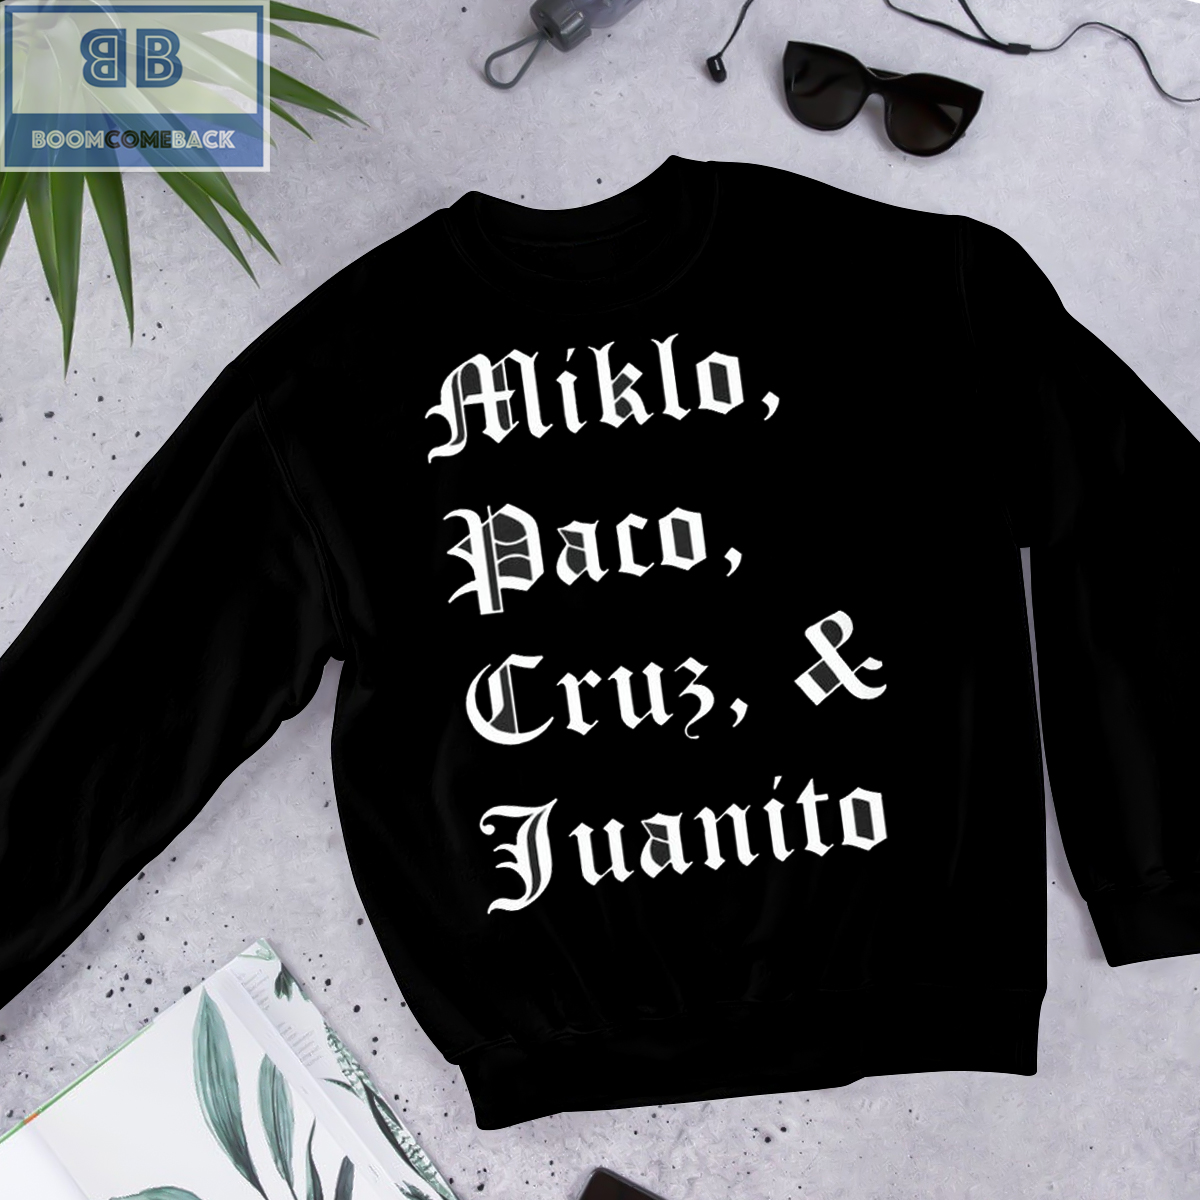 Milklo Daco Cruz & Juanito Shirt